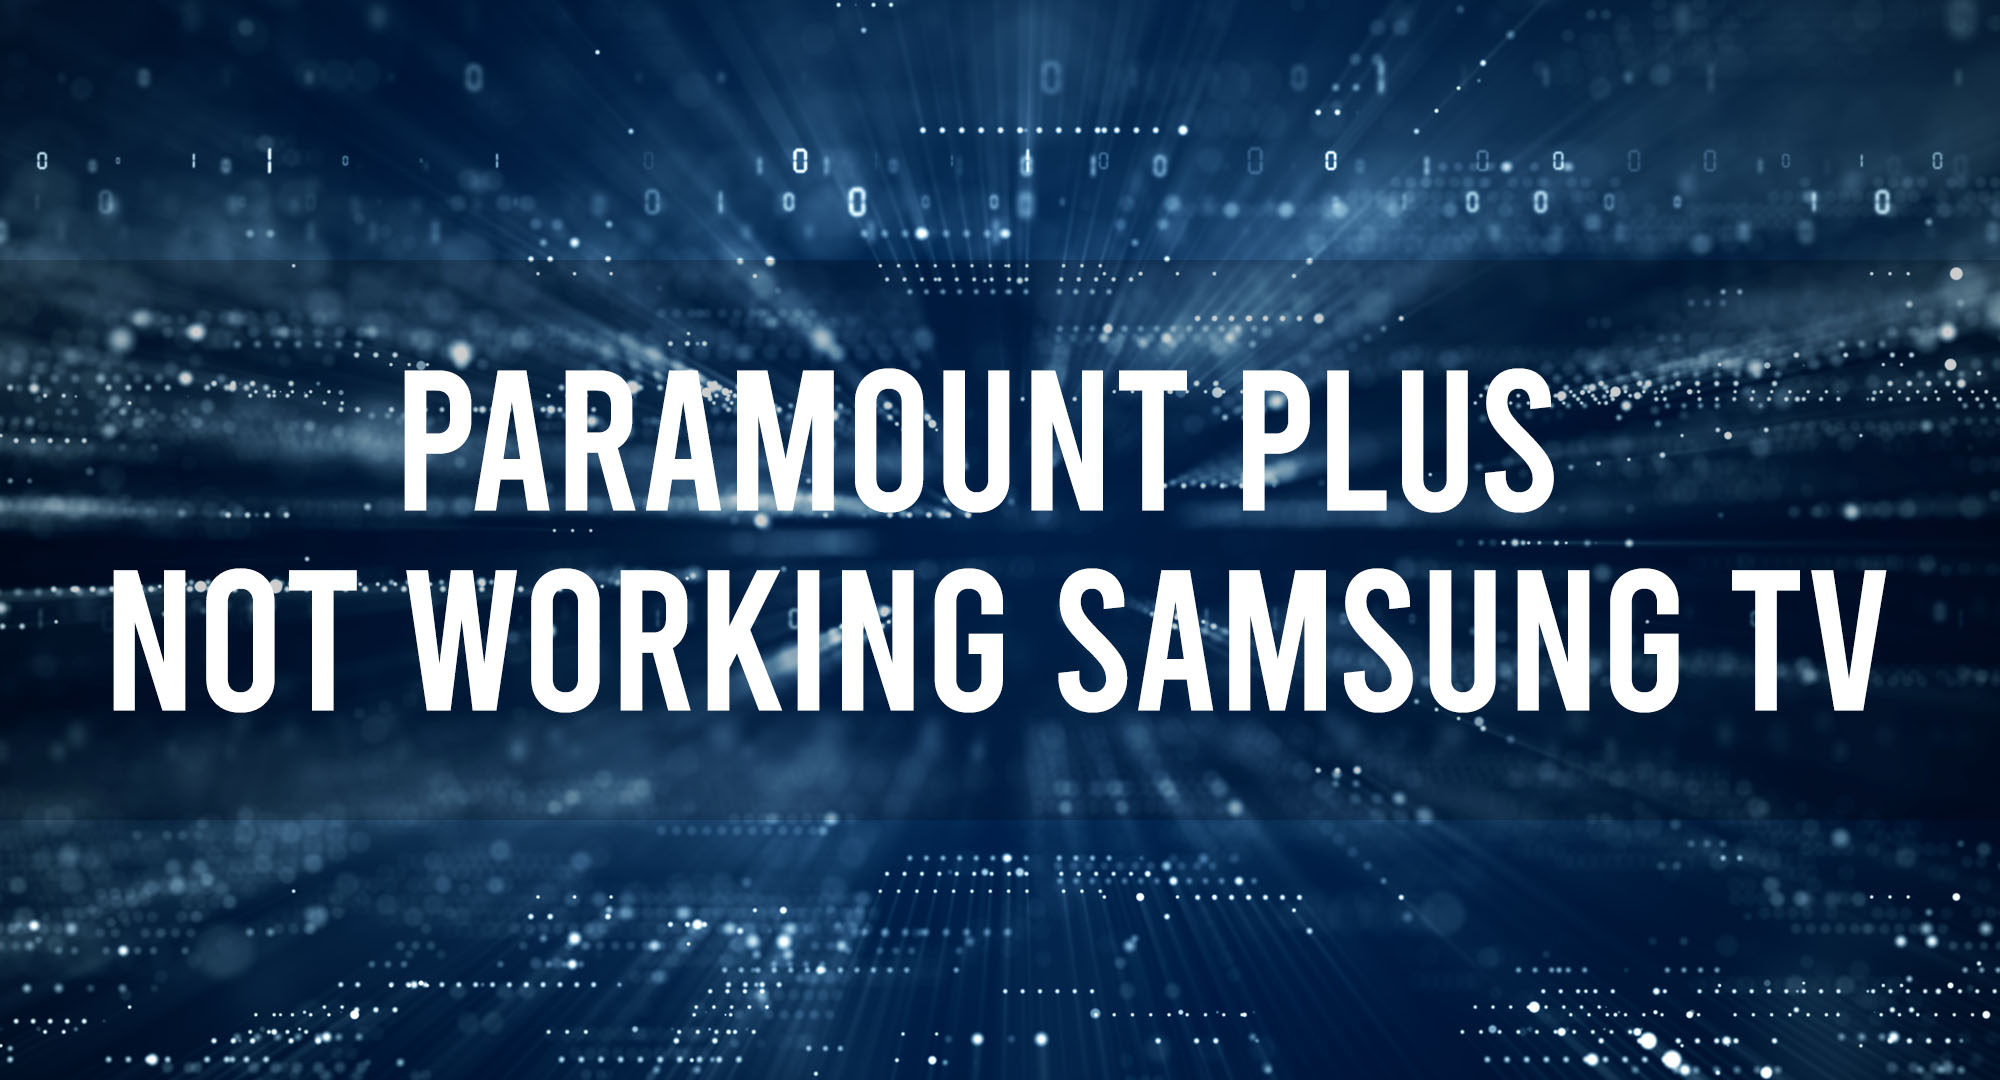 Paramount Plus Not Working on Samsung TV